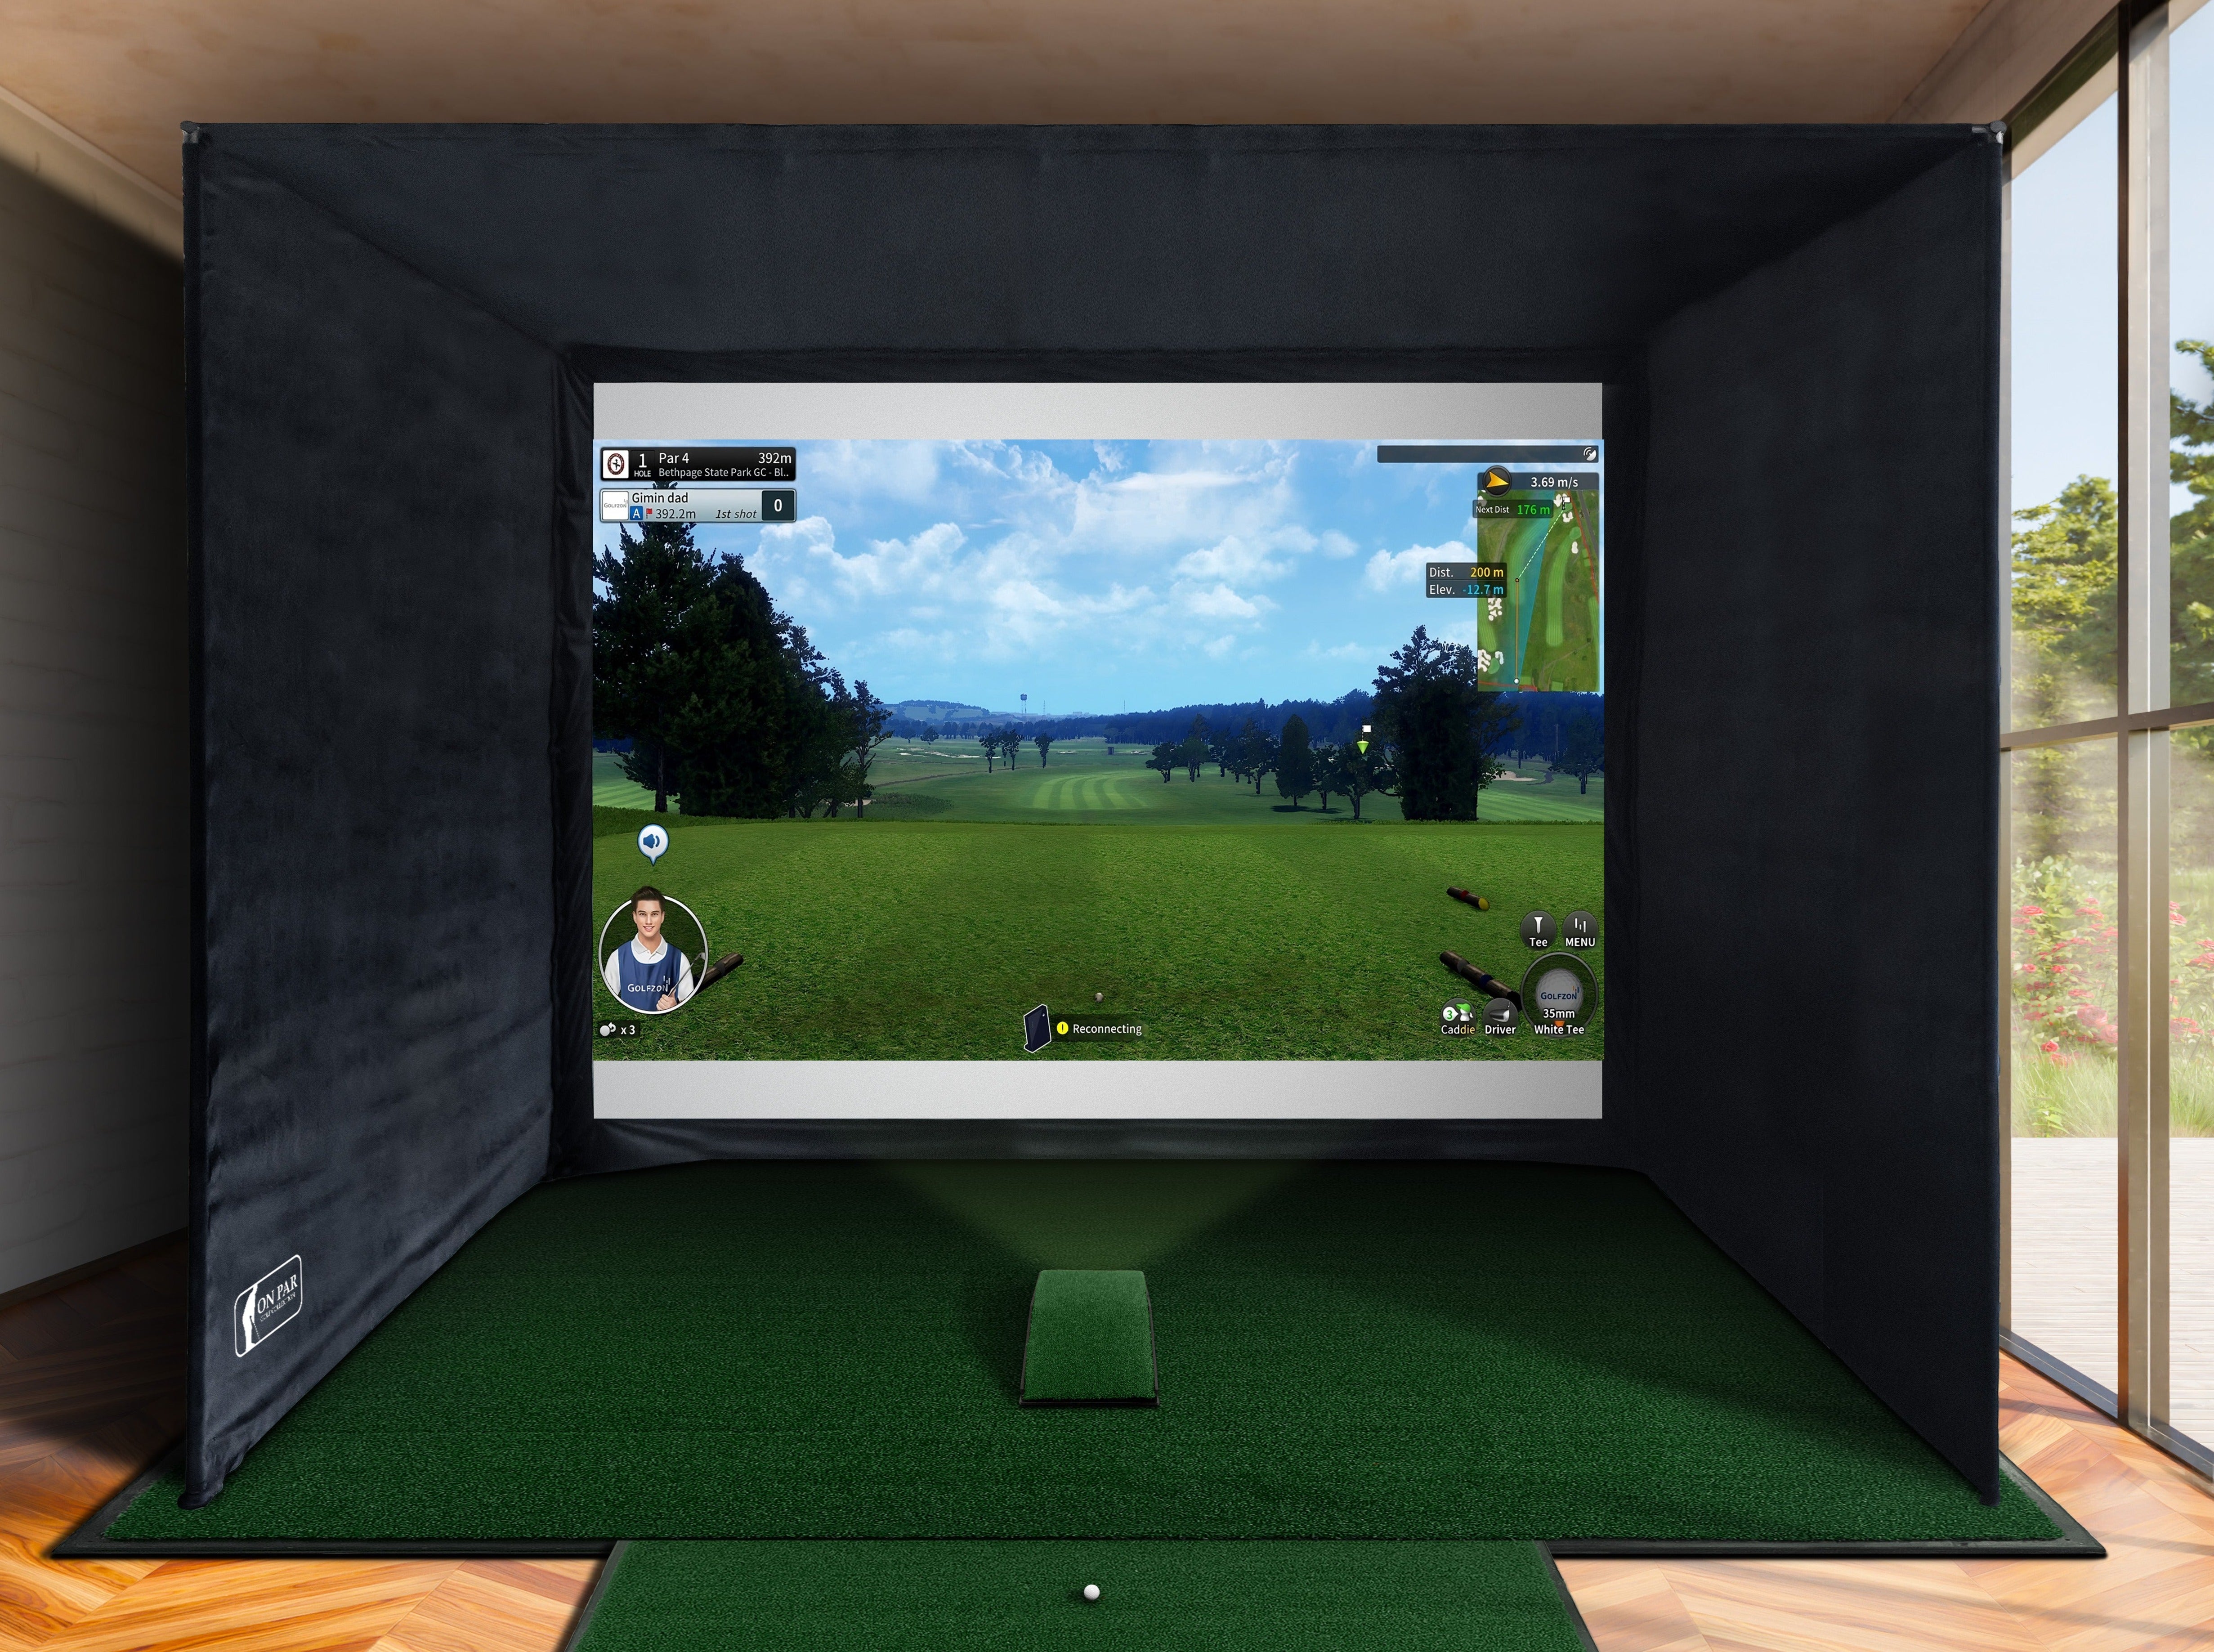 On Par Golf Simulator Kit | Garmin Approach R10 | Compleet Basis Doe-het-zelf Pakket